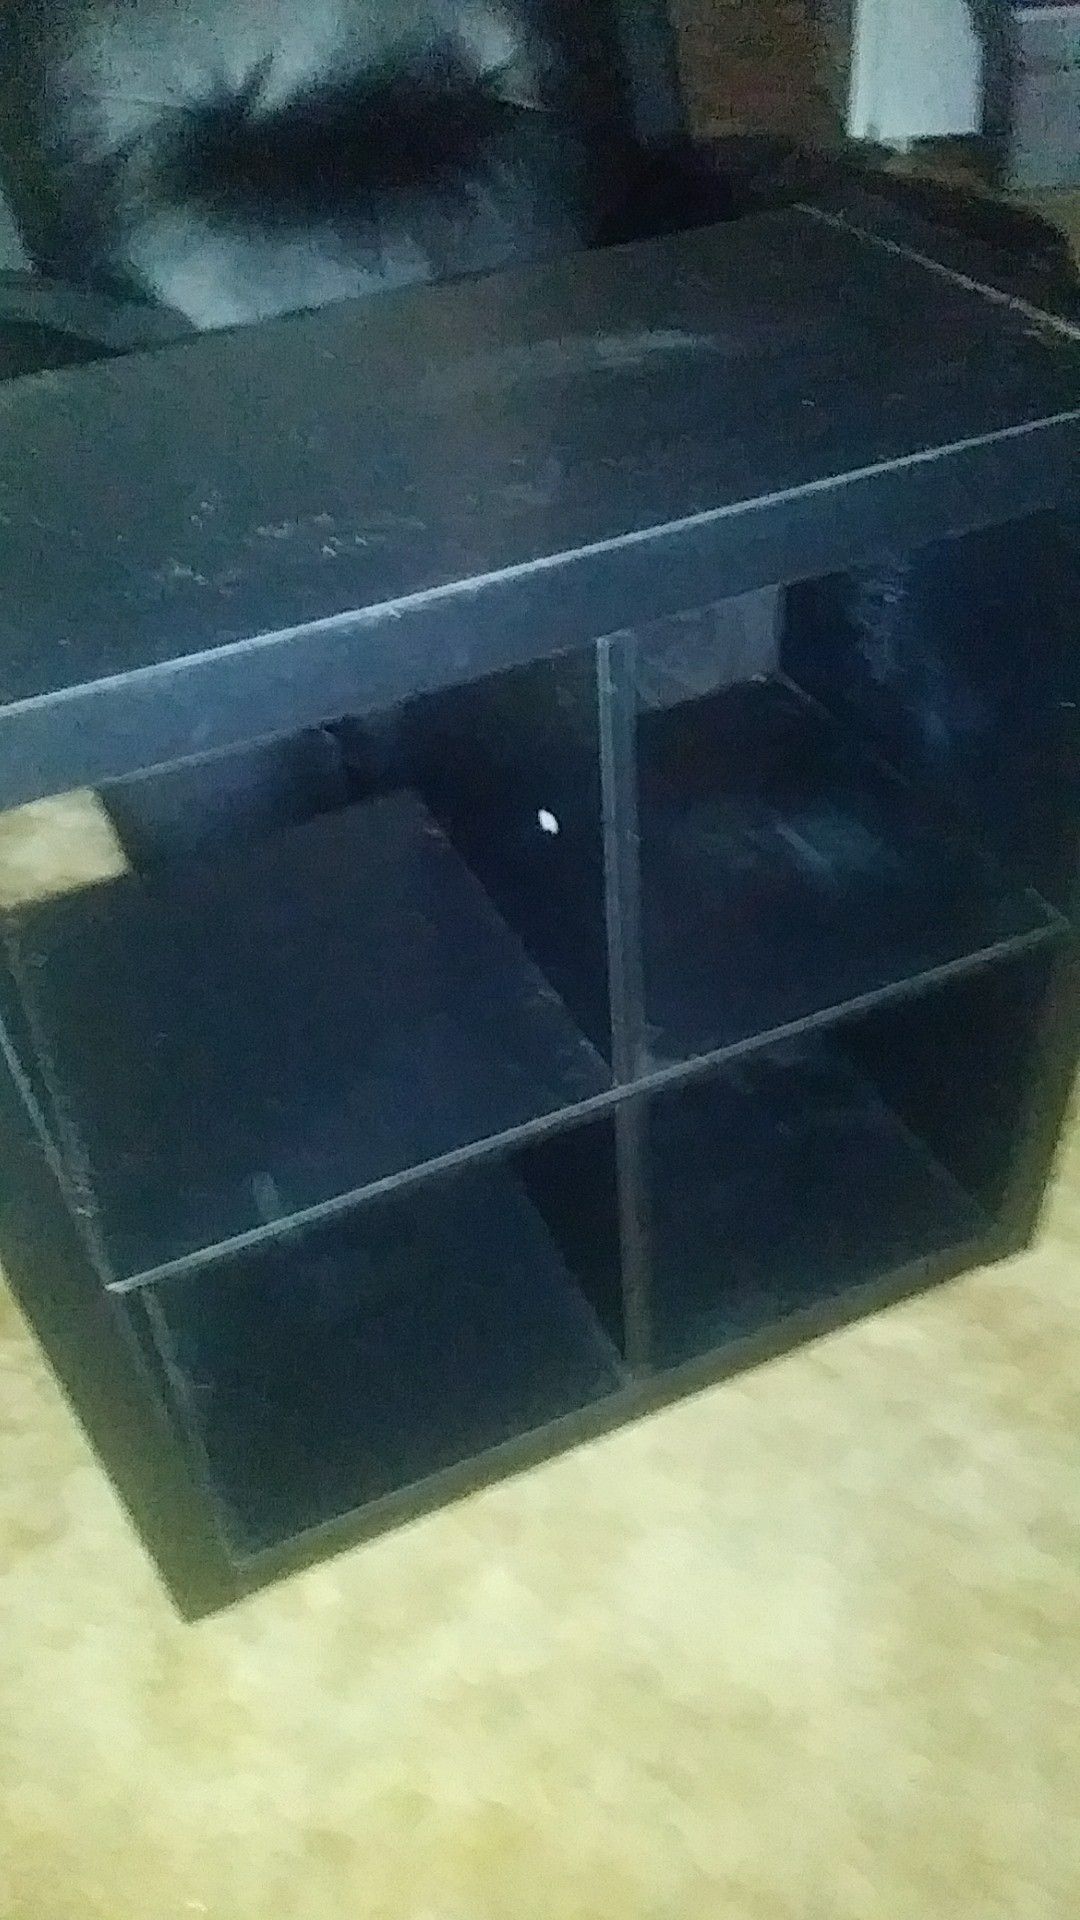 Black 4 cube shelf